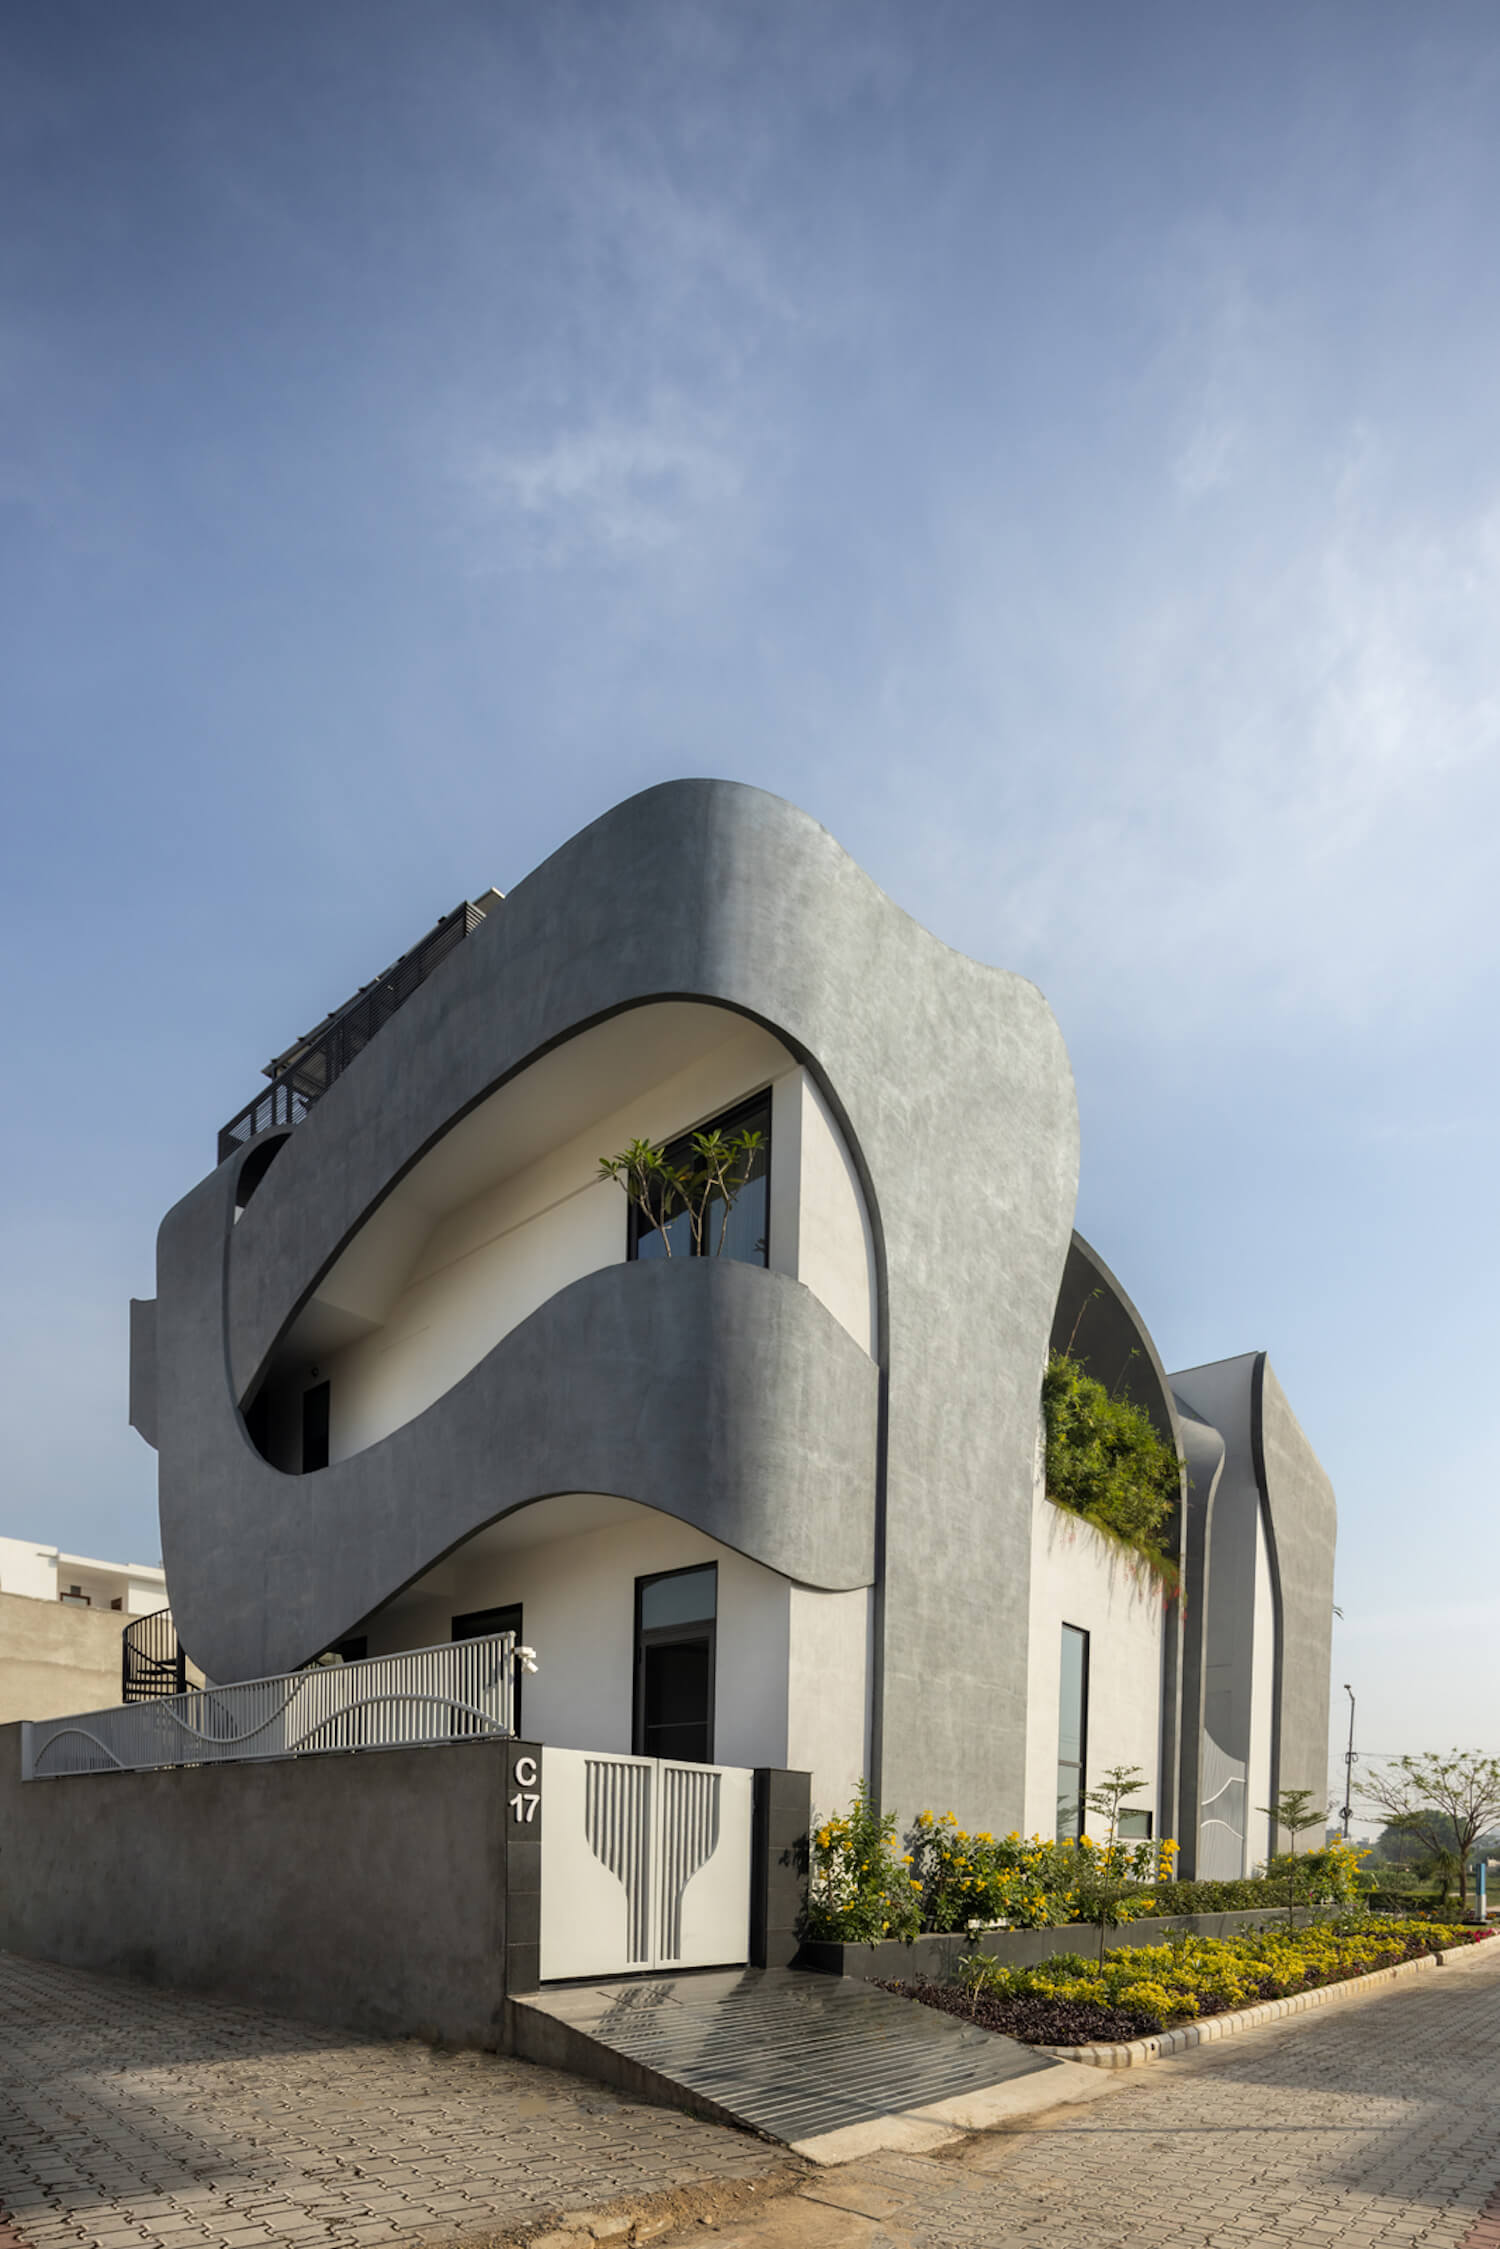 Ribbon House in Mohali, Punjab, India. Architecture: Studio Ardete Architects